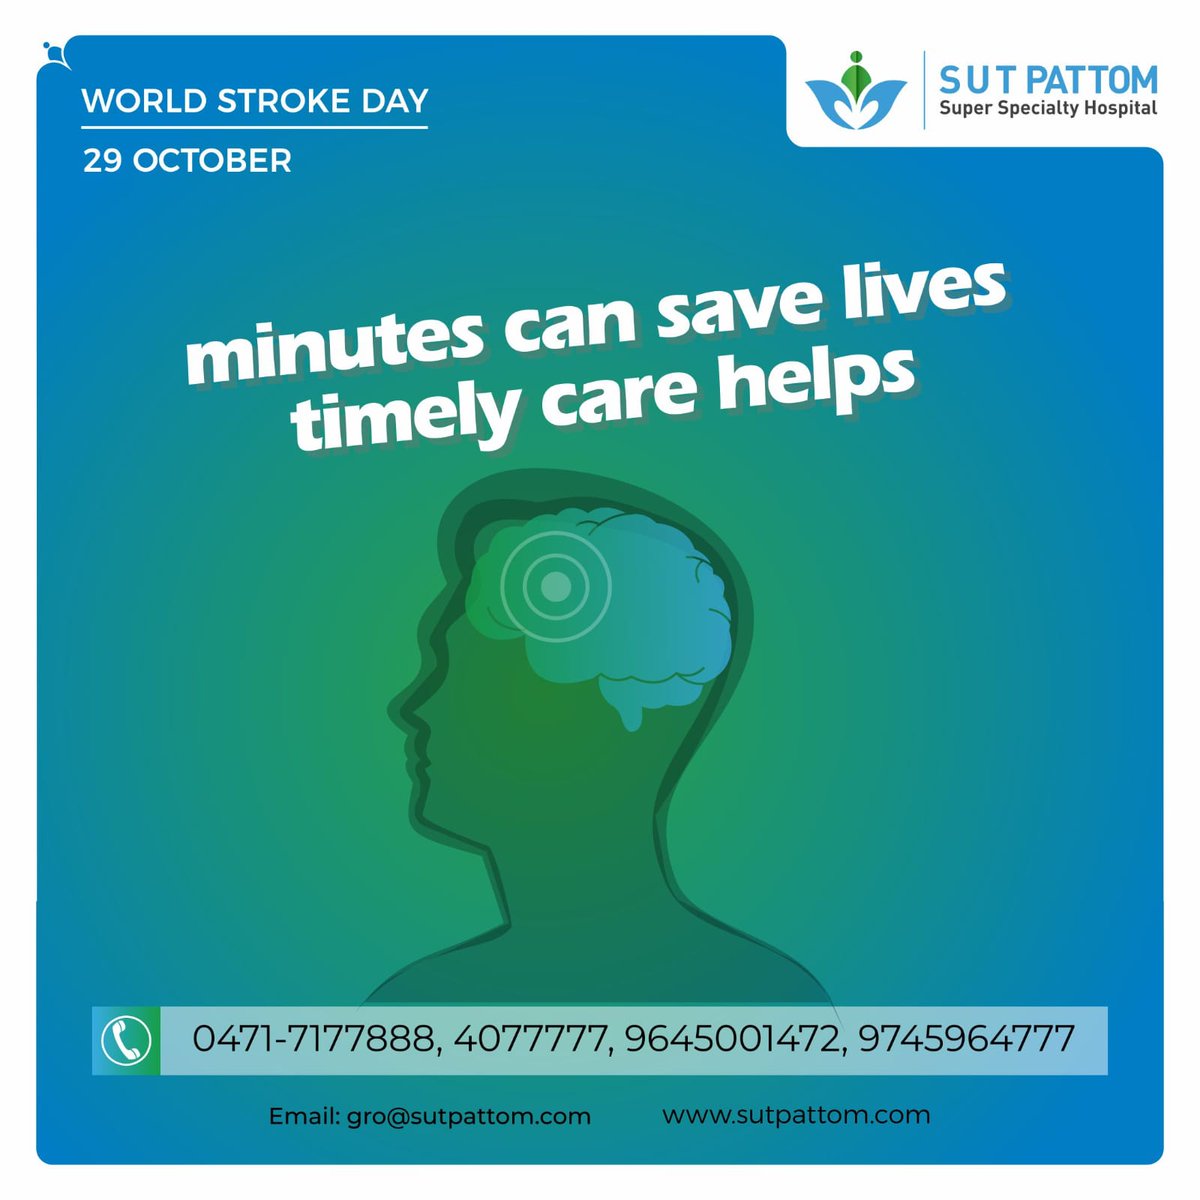 World Stroke Day
29th October

#WorldStrokeDay #worldstroke #stroke #strokeday

Home Care: 9745964777
Tele-Medicine: 9645001472 / 9961589007
Booking Landline Number: 0471-4077777 / 7177888
Email: gro@sutpattom.com

#SUT #SUTPattom #SUTHospital #SUTPattomHospital #Hospital